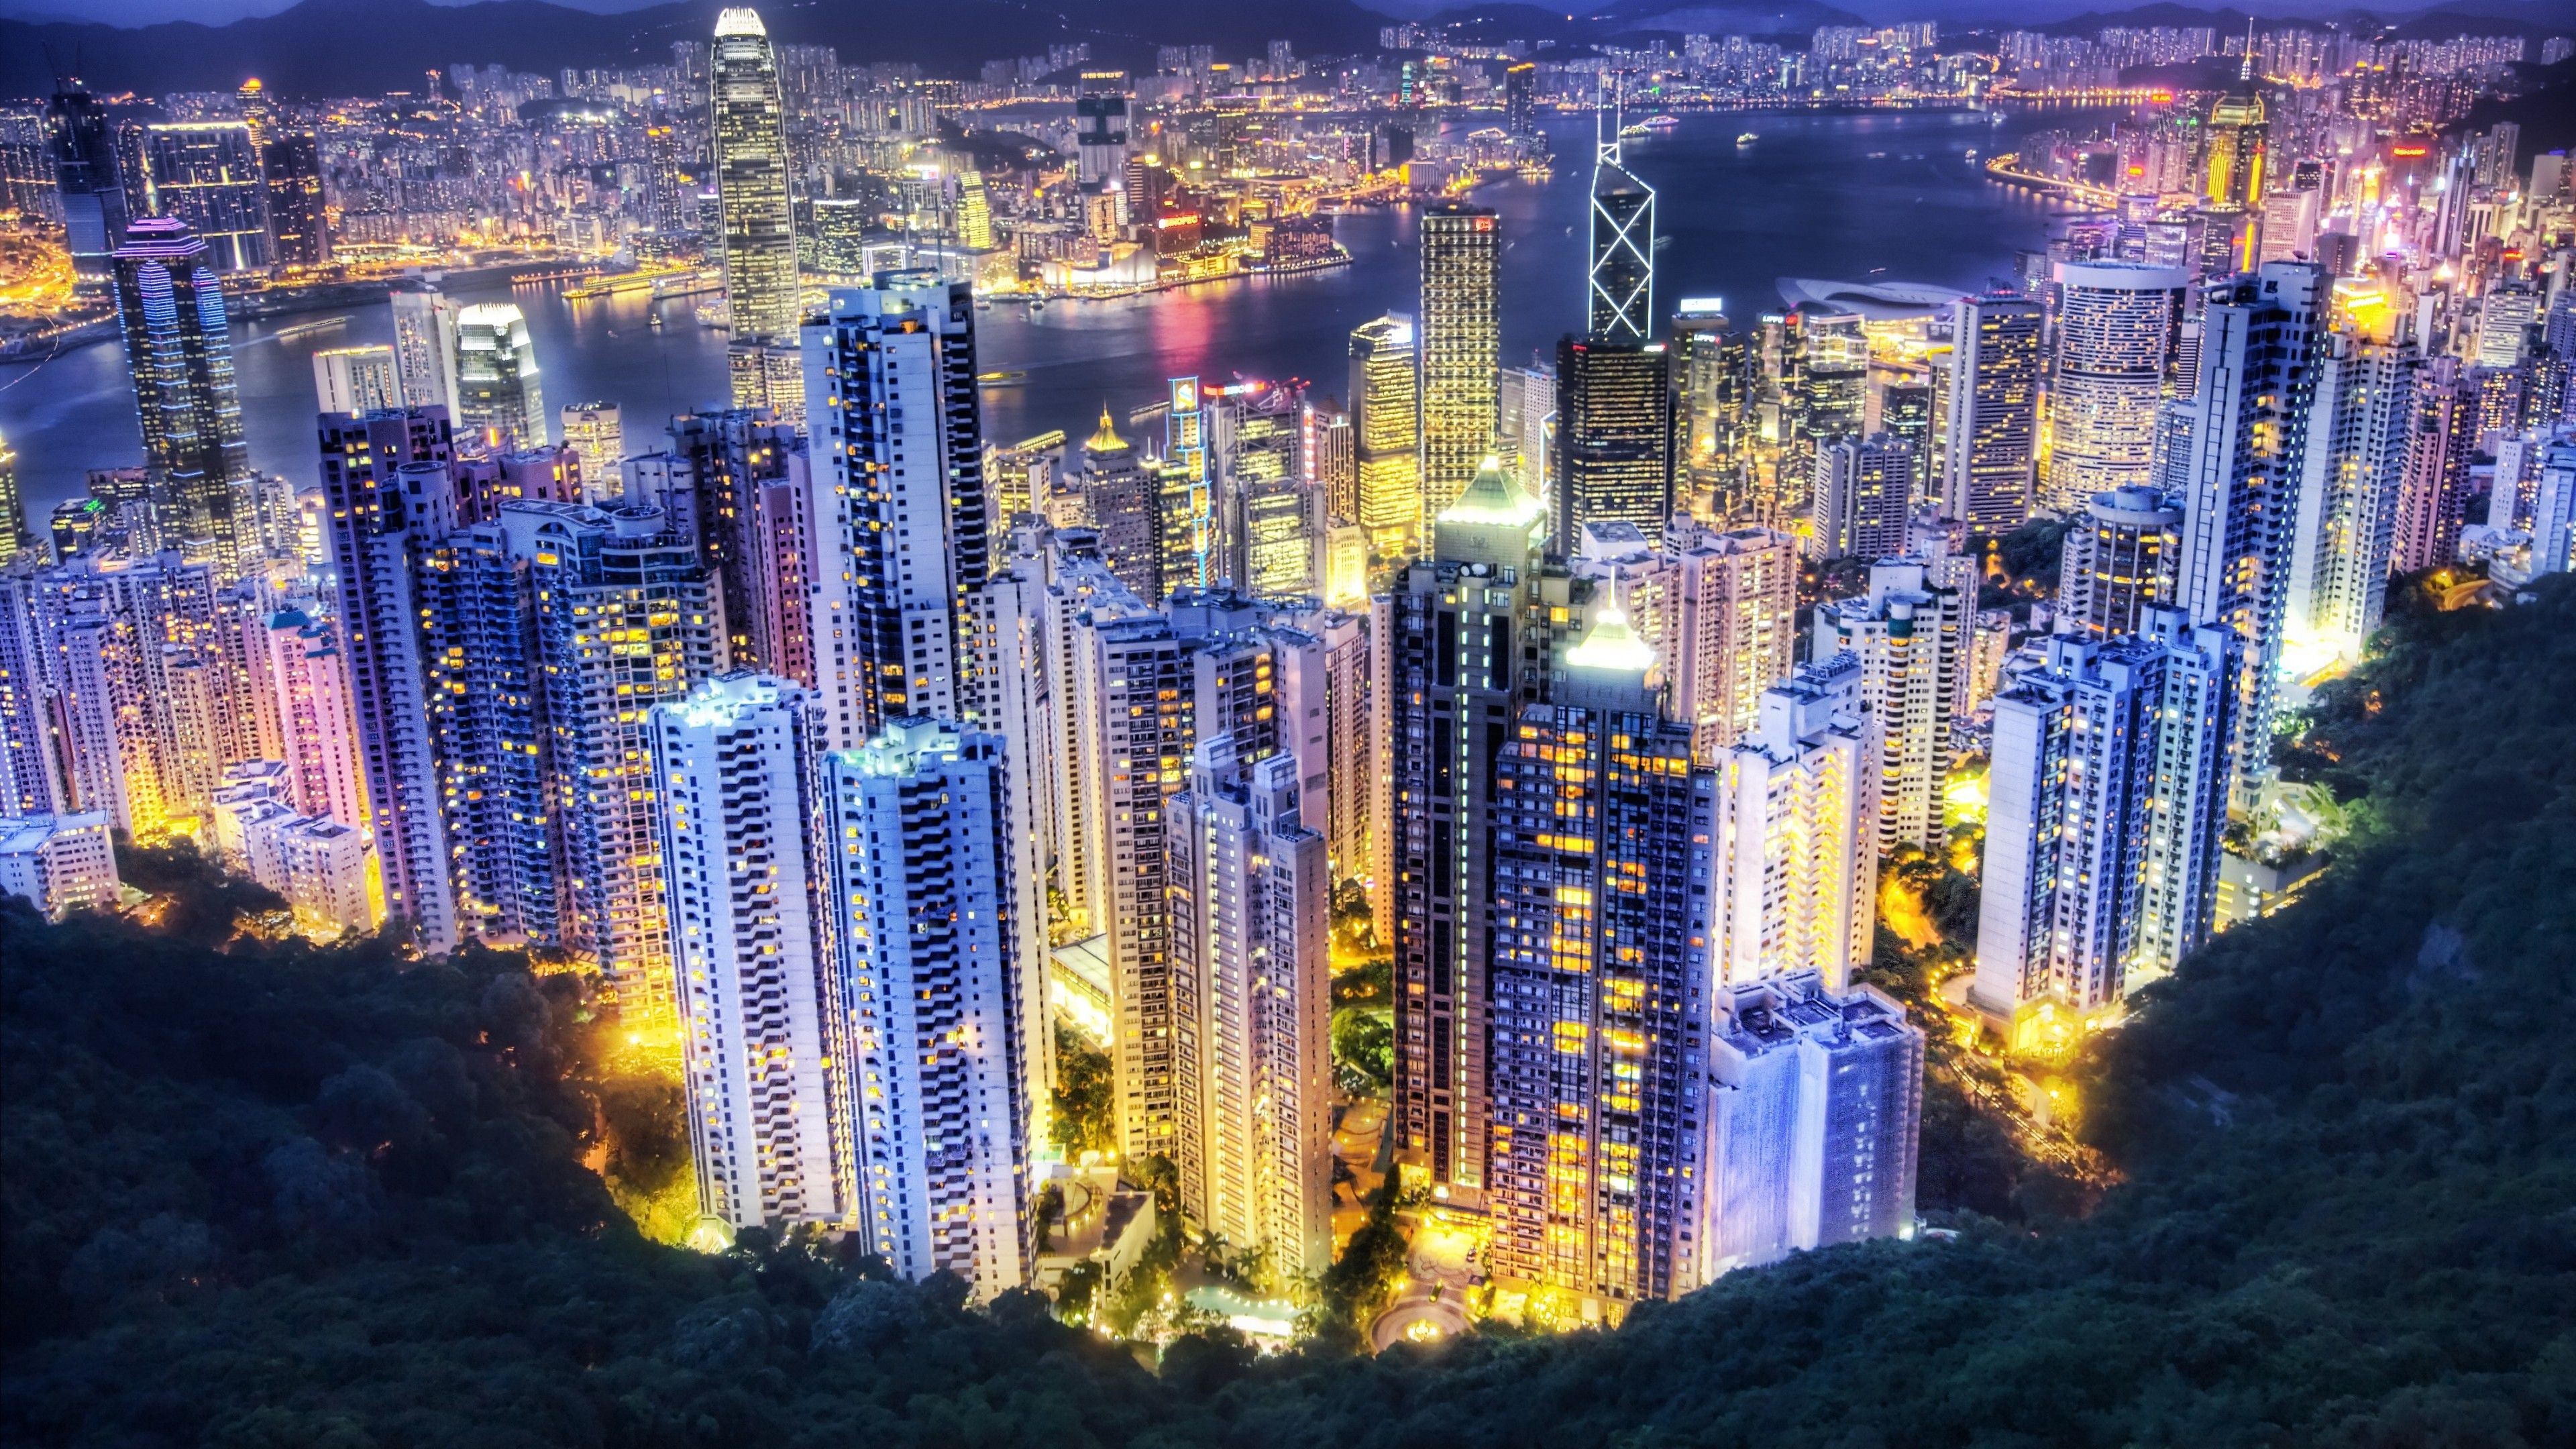 Hong Kong City 4K Wallpaper, Aerial view, Night lights, Cityscape, Sunset, Skyscrapers, Vibrant, World